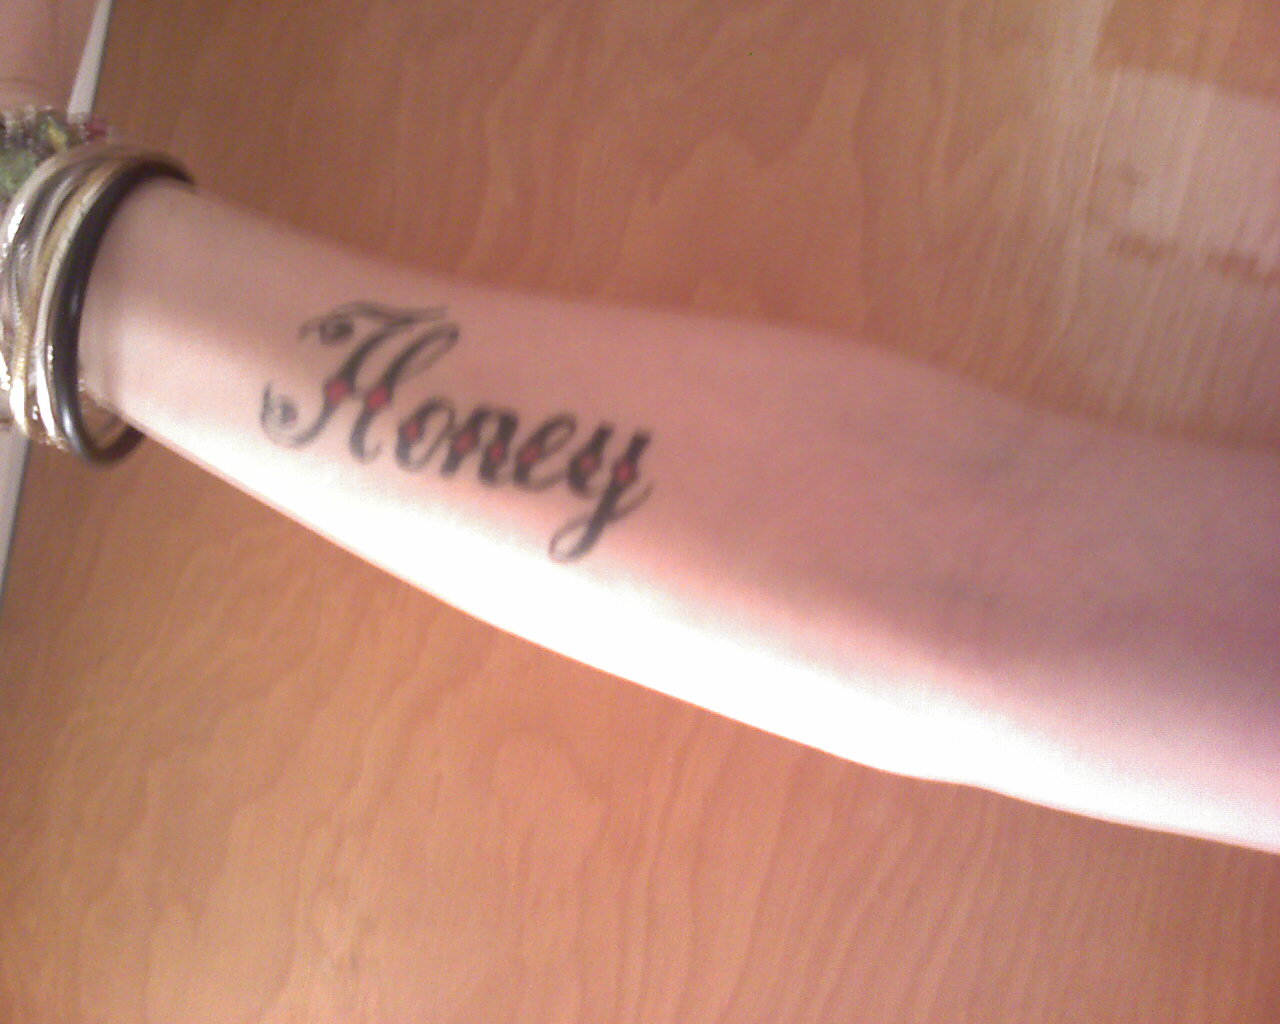 Honey - Honey Name Tattoo Designs - 1280x1024 Wallpaper 